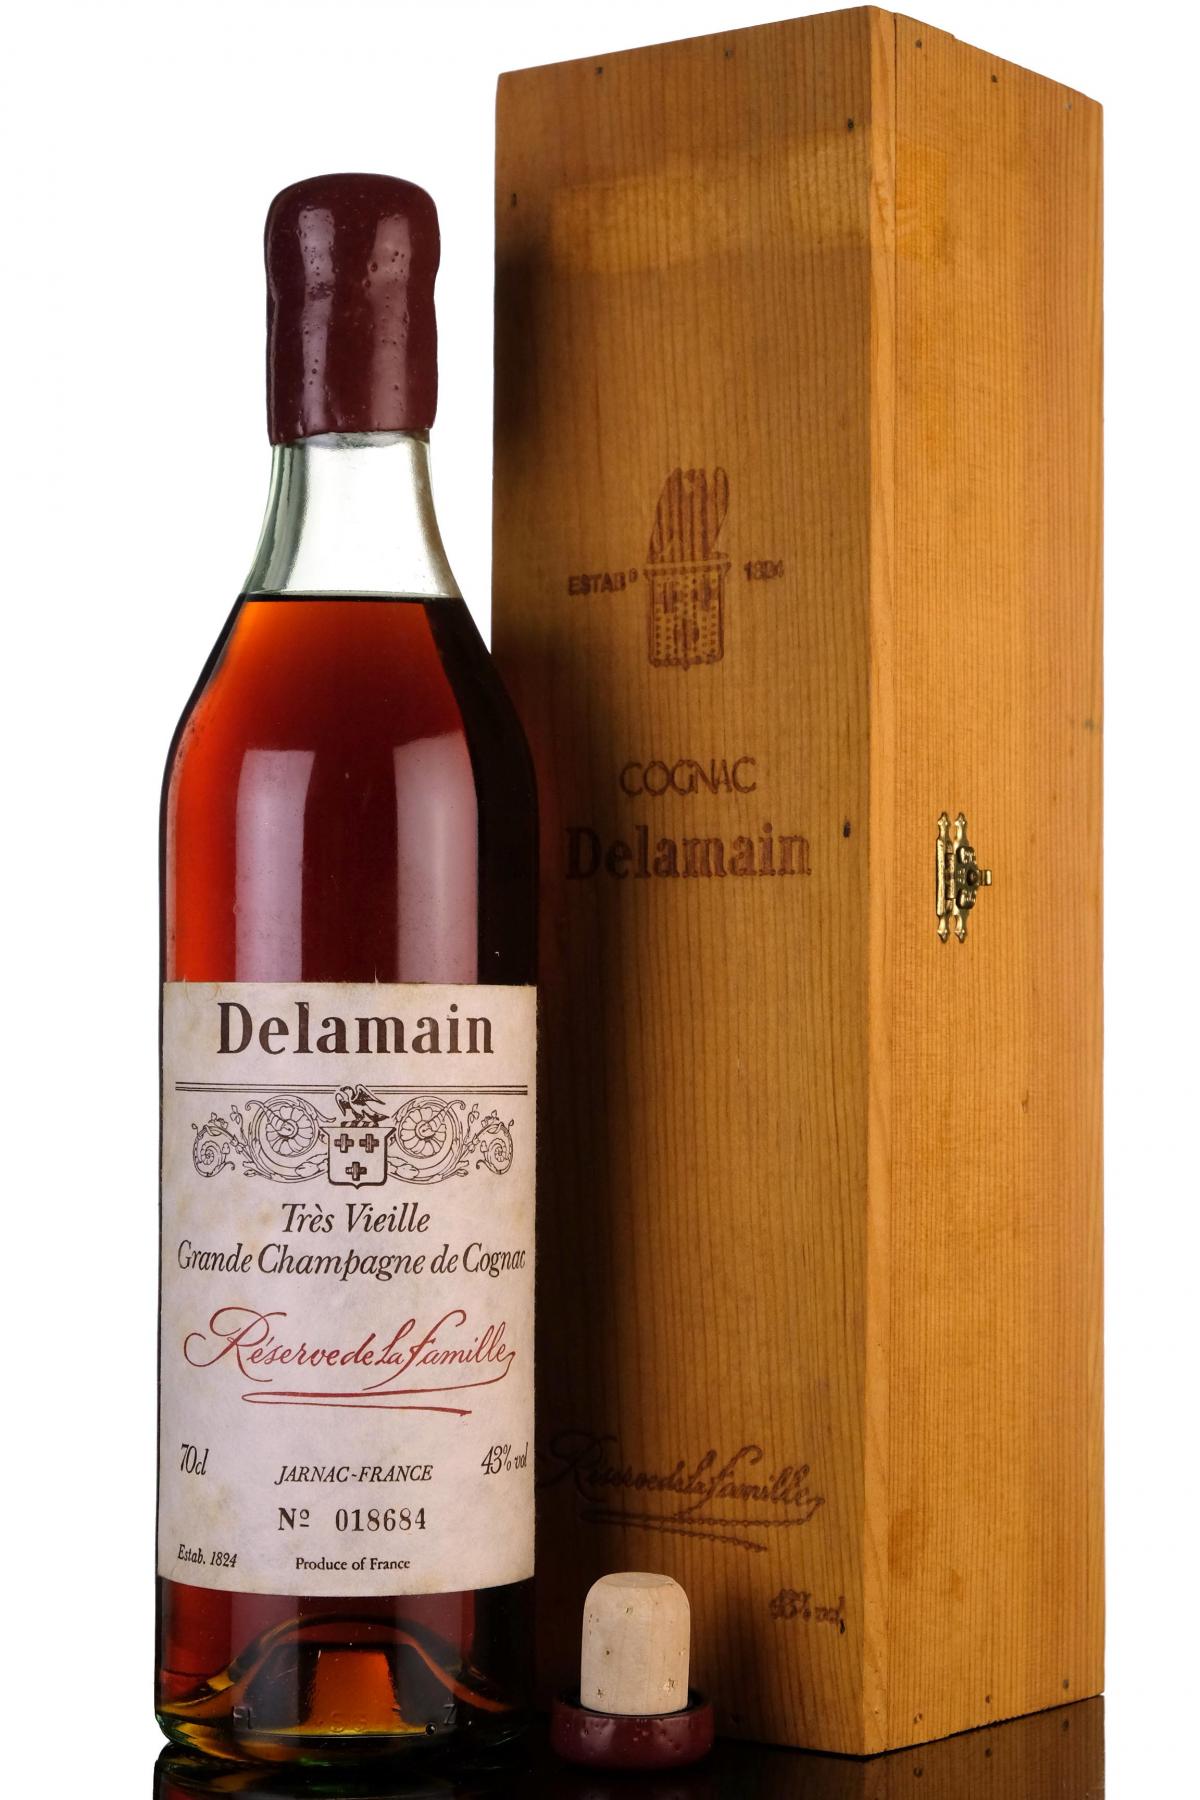 Delamain Cognac Grande Champagne